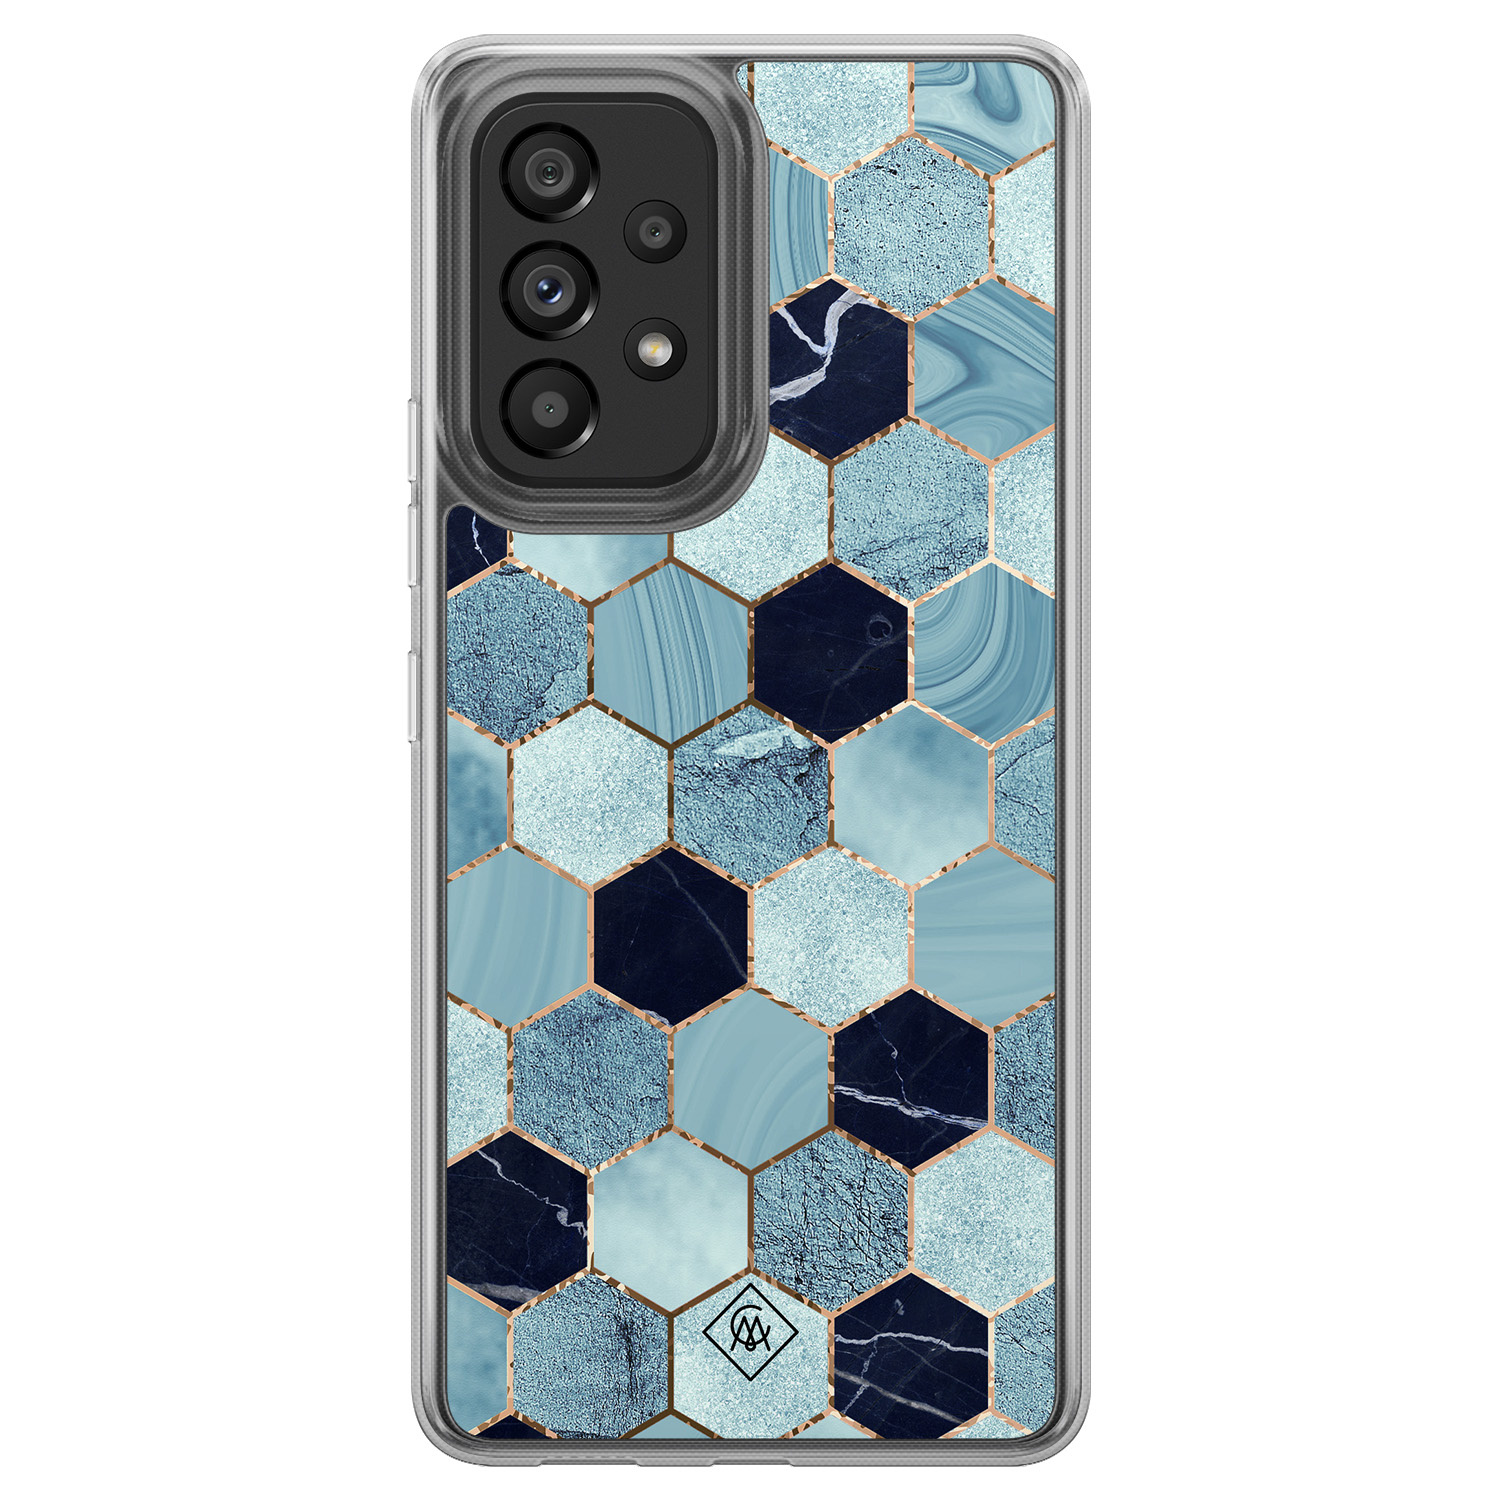 Samsung Galaxy A52 5G hoesje siliconen - Blue cubes - Casimoda® 2-in-1 case hybride - Schokbestendig - Marble design - Verhoogde randen - Blauw, Transparant